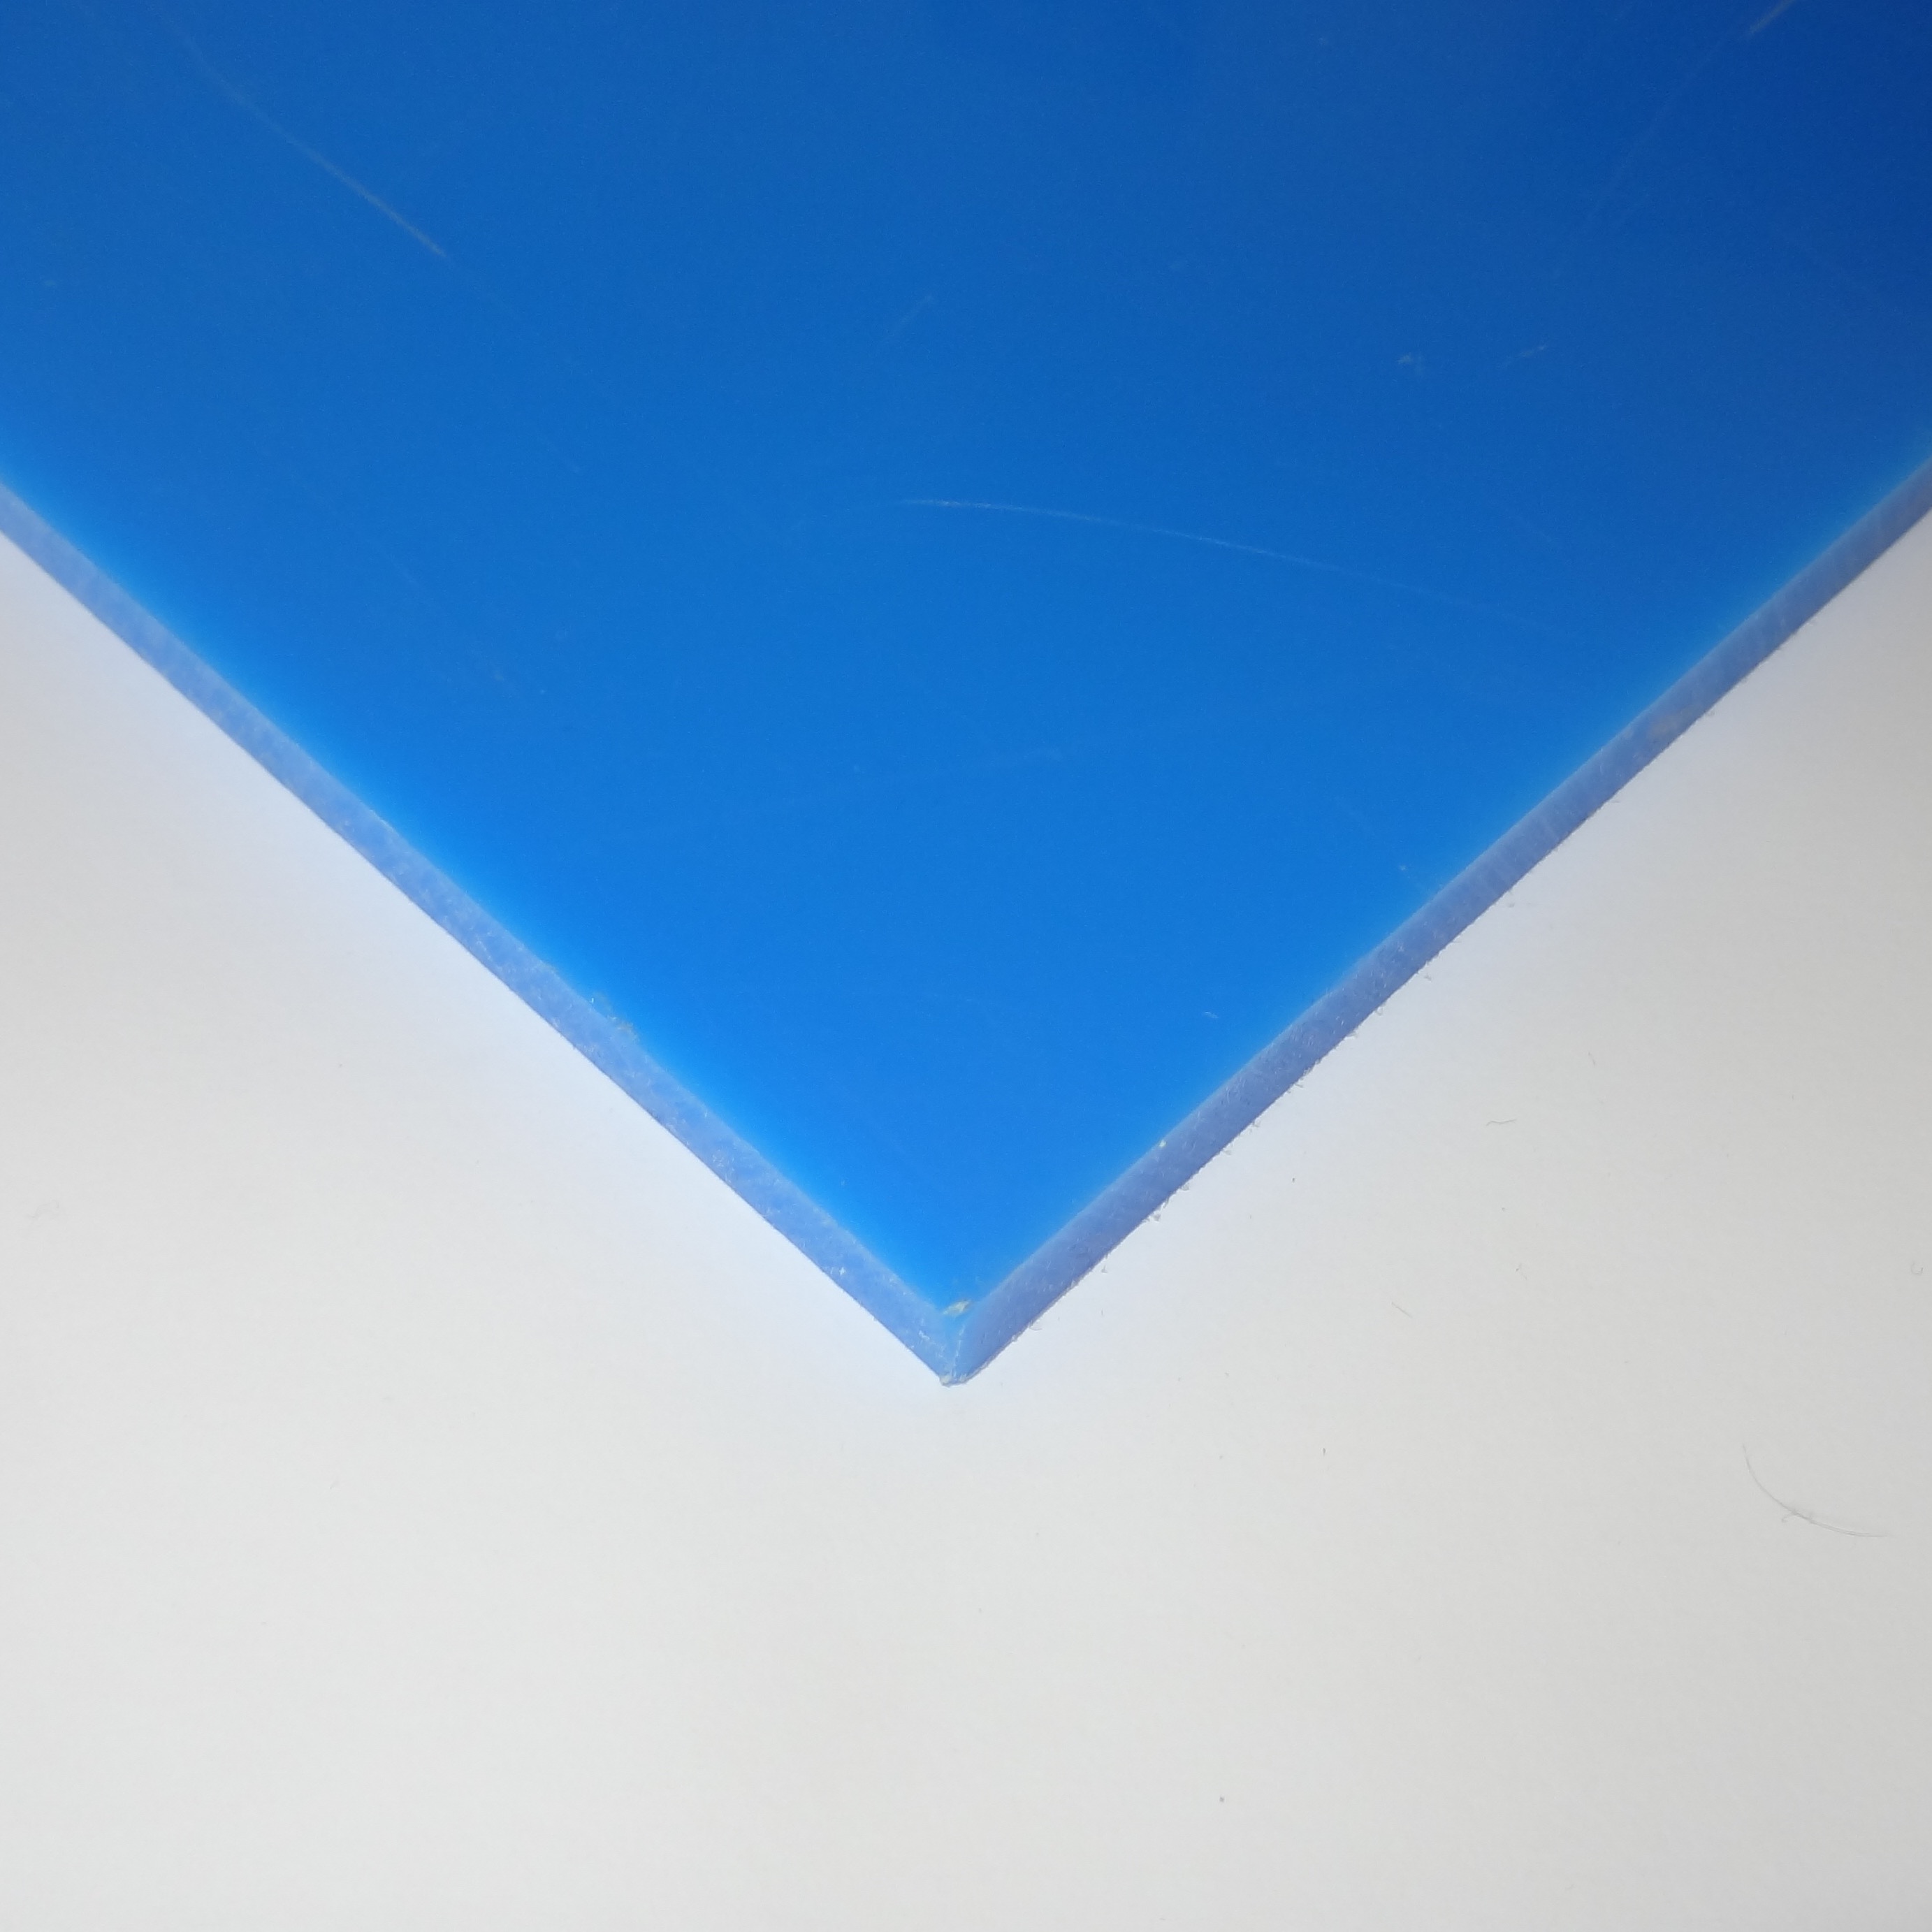 1" thick NYLATRON® MC 901 Unfilled Cast NYLON Laminate Sheet, blue,  24"W x 48"L sheet